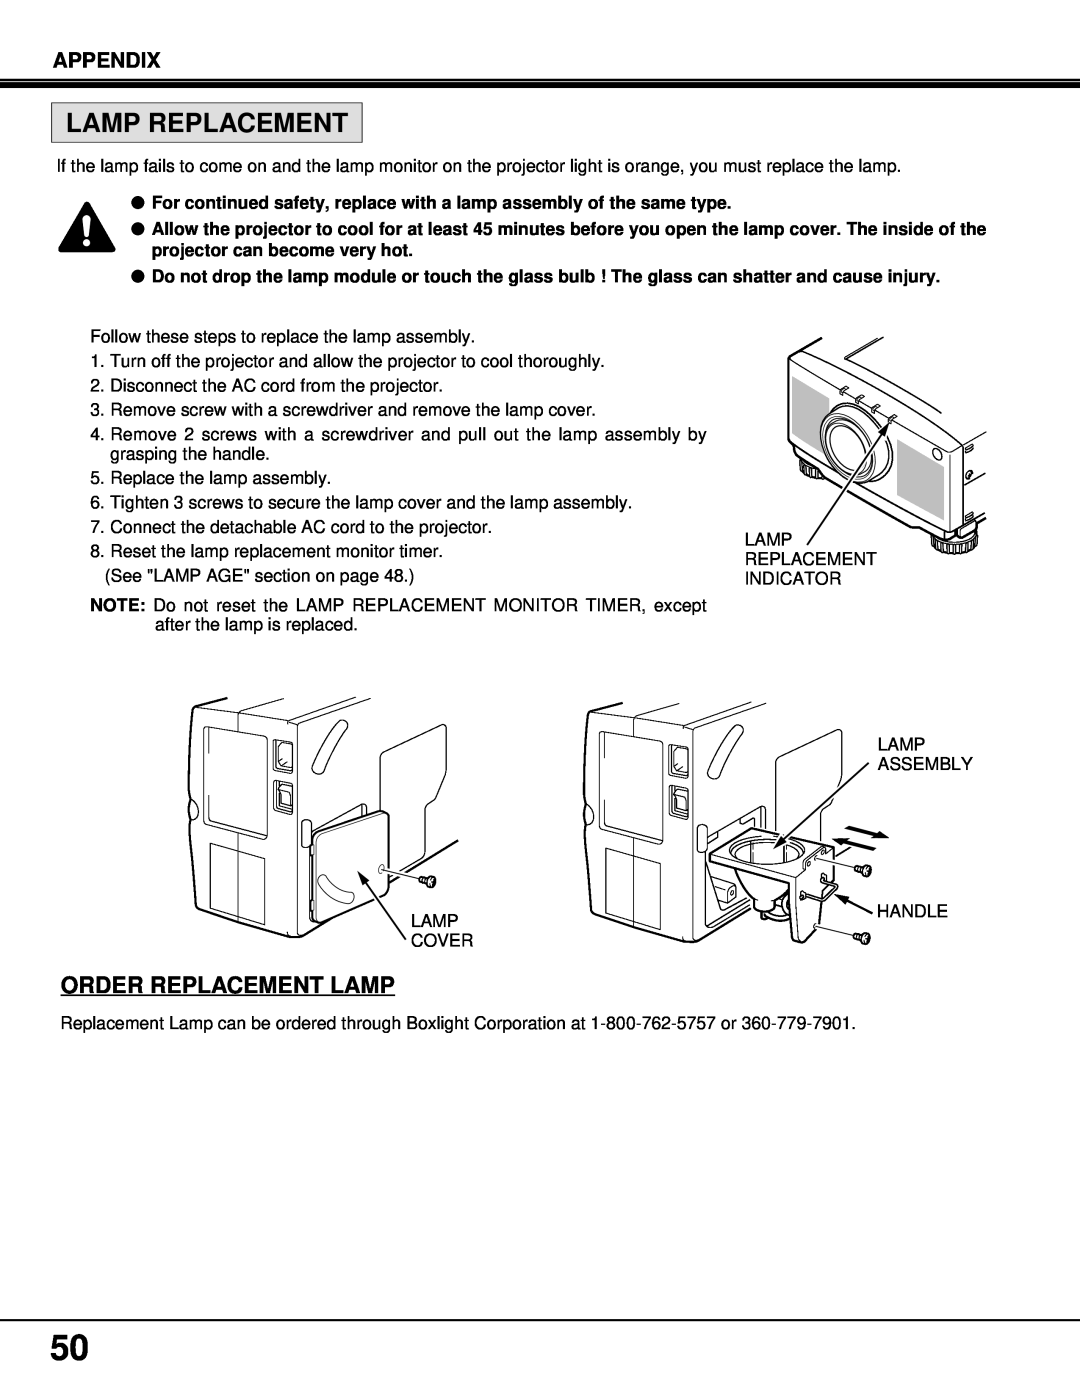 BOXLIGHT MP-37t manual Lamp Replacement, Order Replacement Lamp, Appendix 